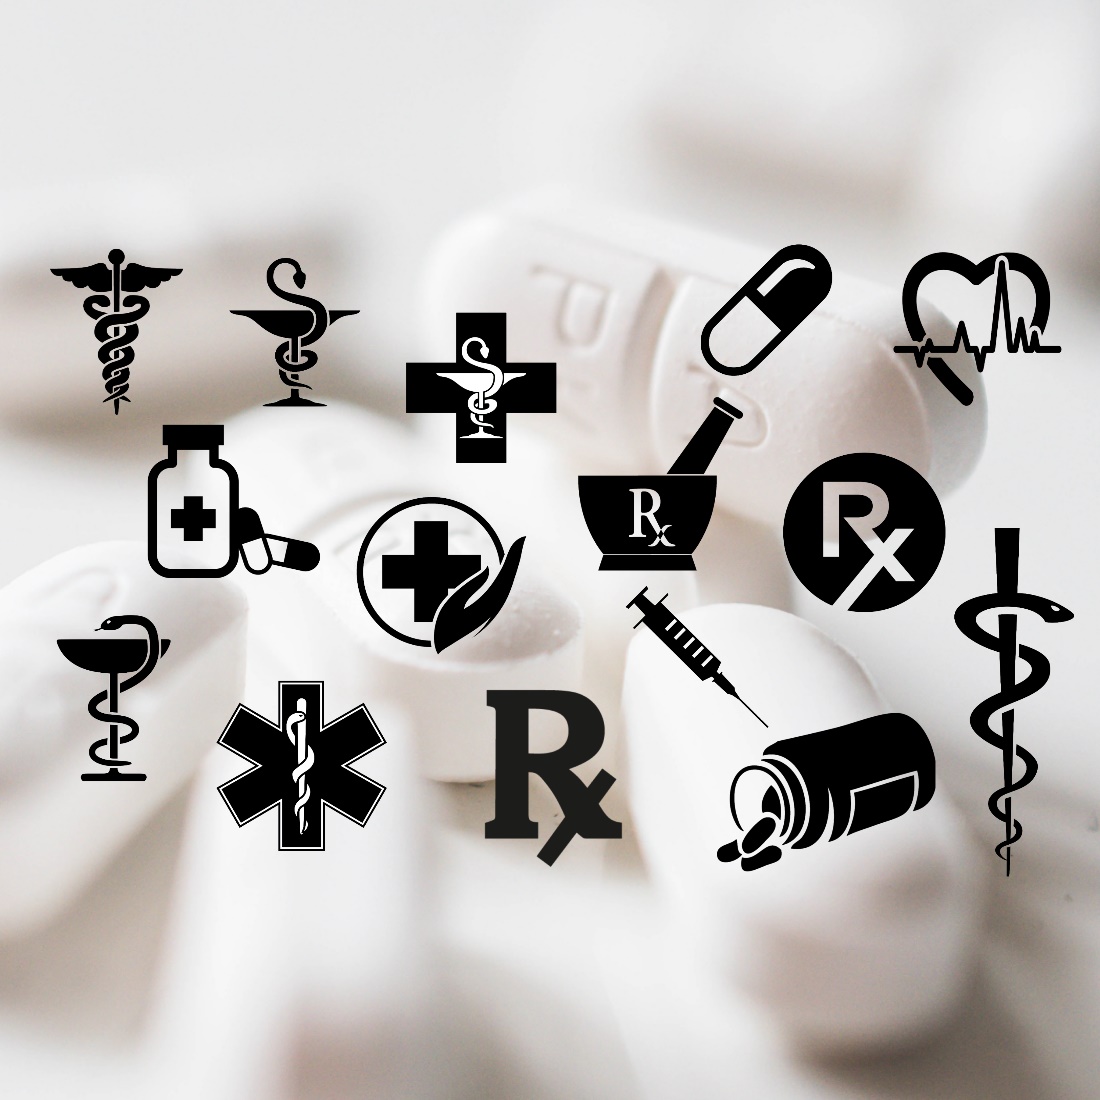 Medical Prescription SVG PNG JPG Symbols + Font, Nursing symbol, pharmacy, snake, Download Hight quality Transparent Vector Silhouette Clipart Image Instant Download preview image.